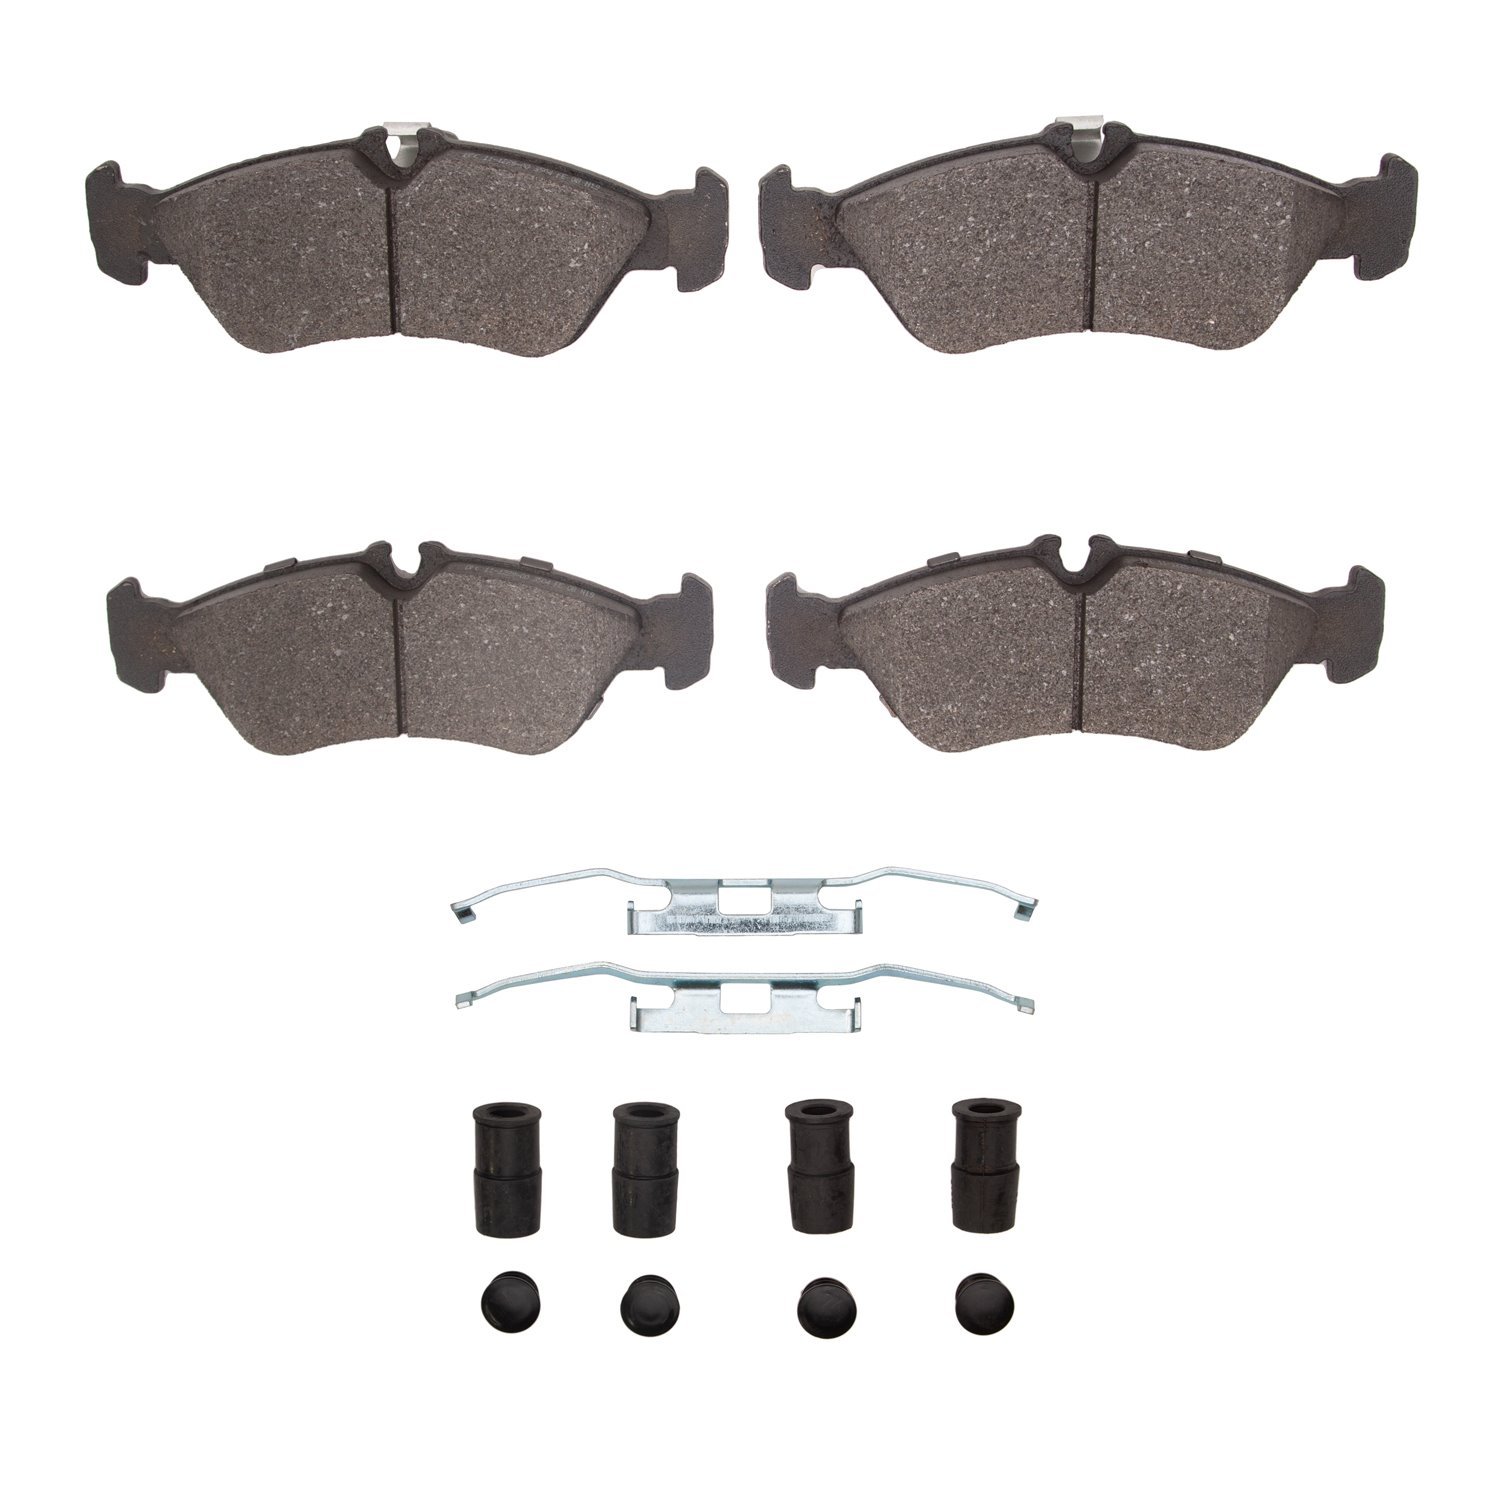 1551-1229-01 5000 Advanced Low-Metallic Brake Pads & Hardware Kit, 2002-2006 Multiple Makes/Models, Position: Rear,Rr